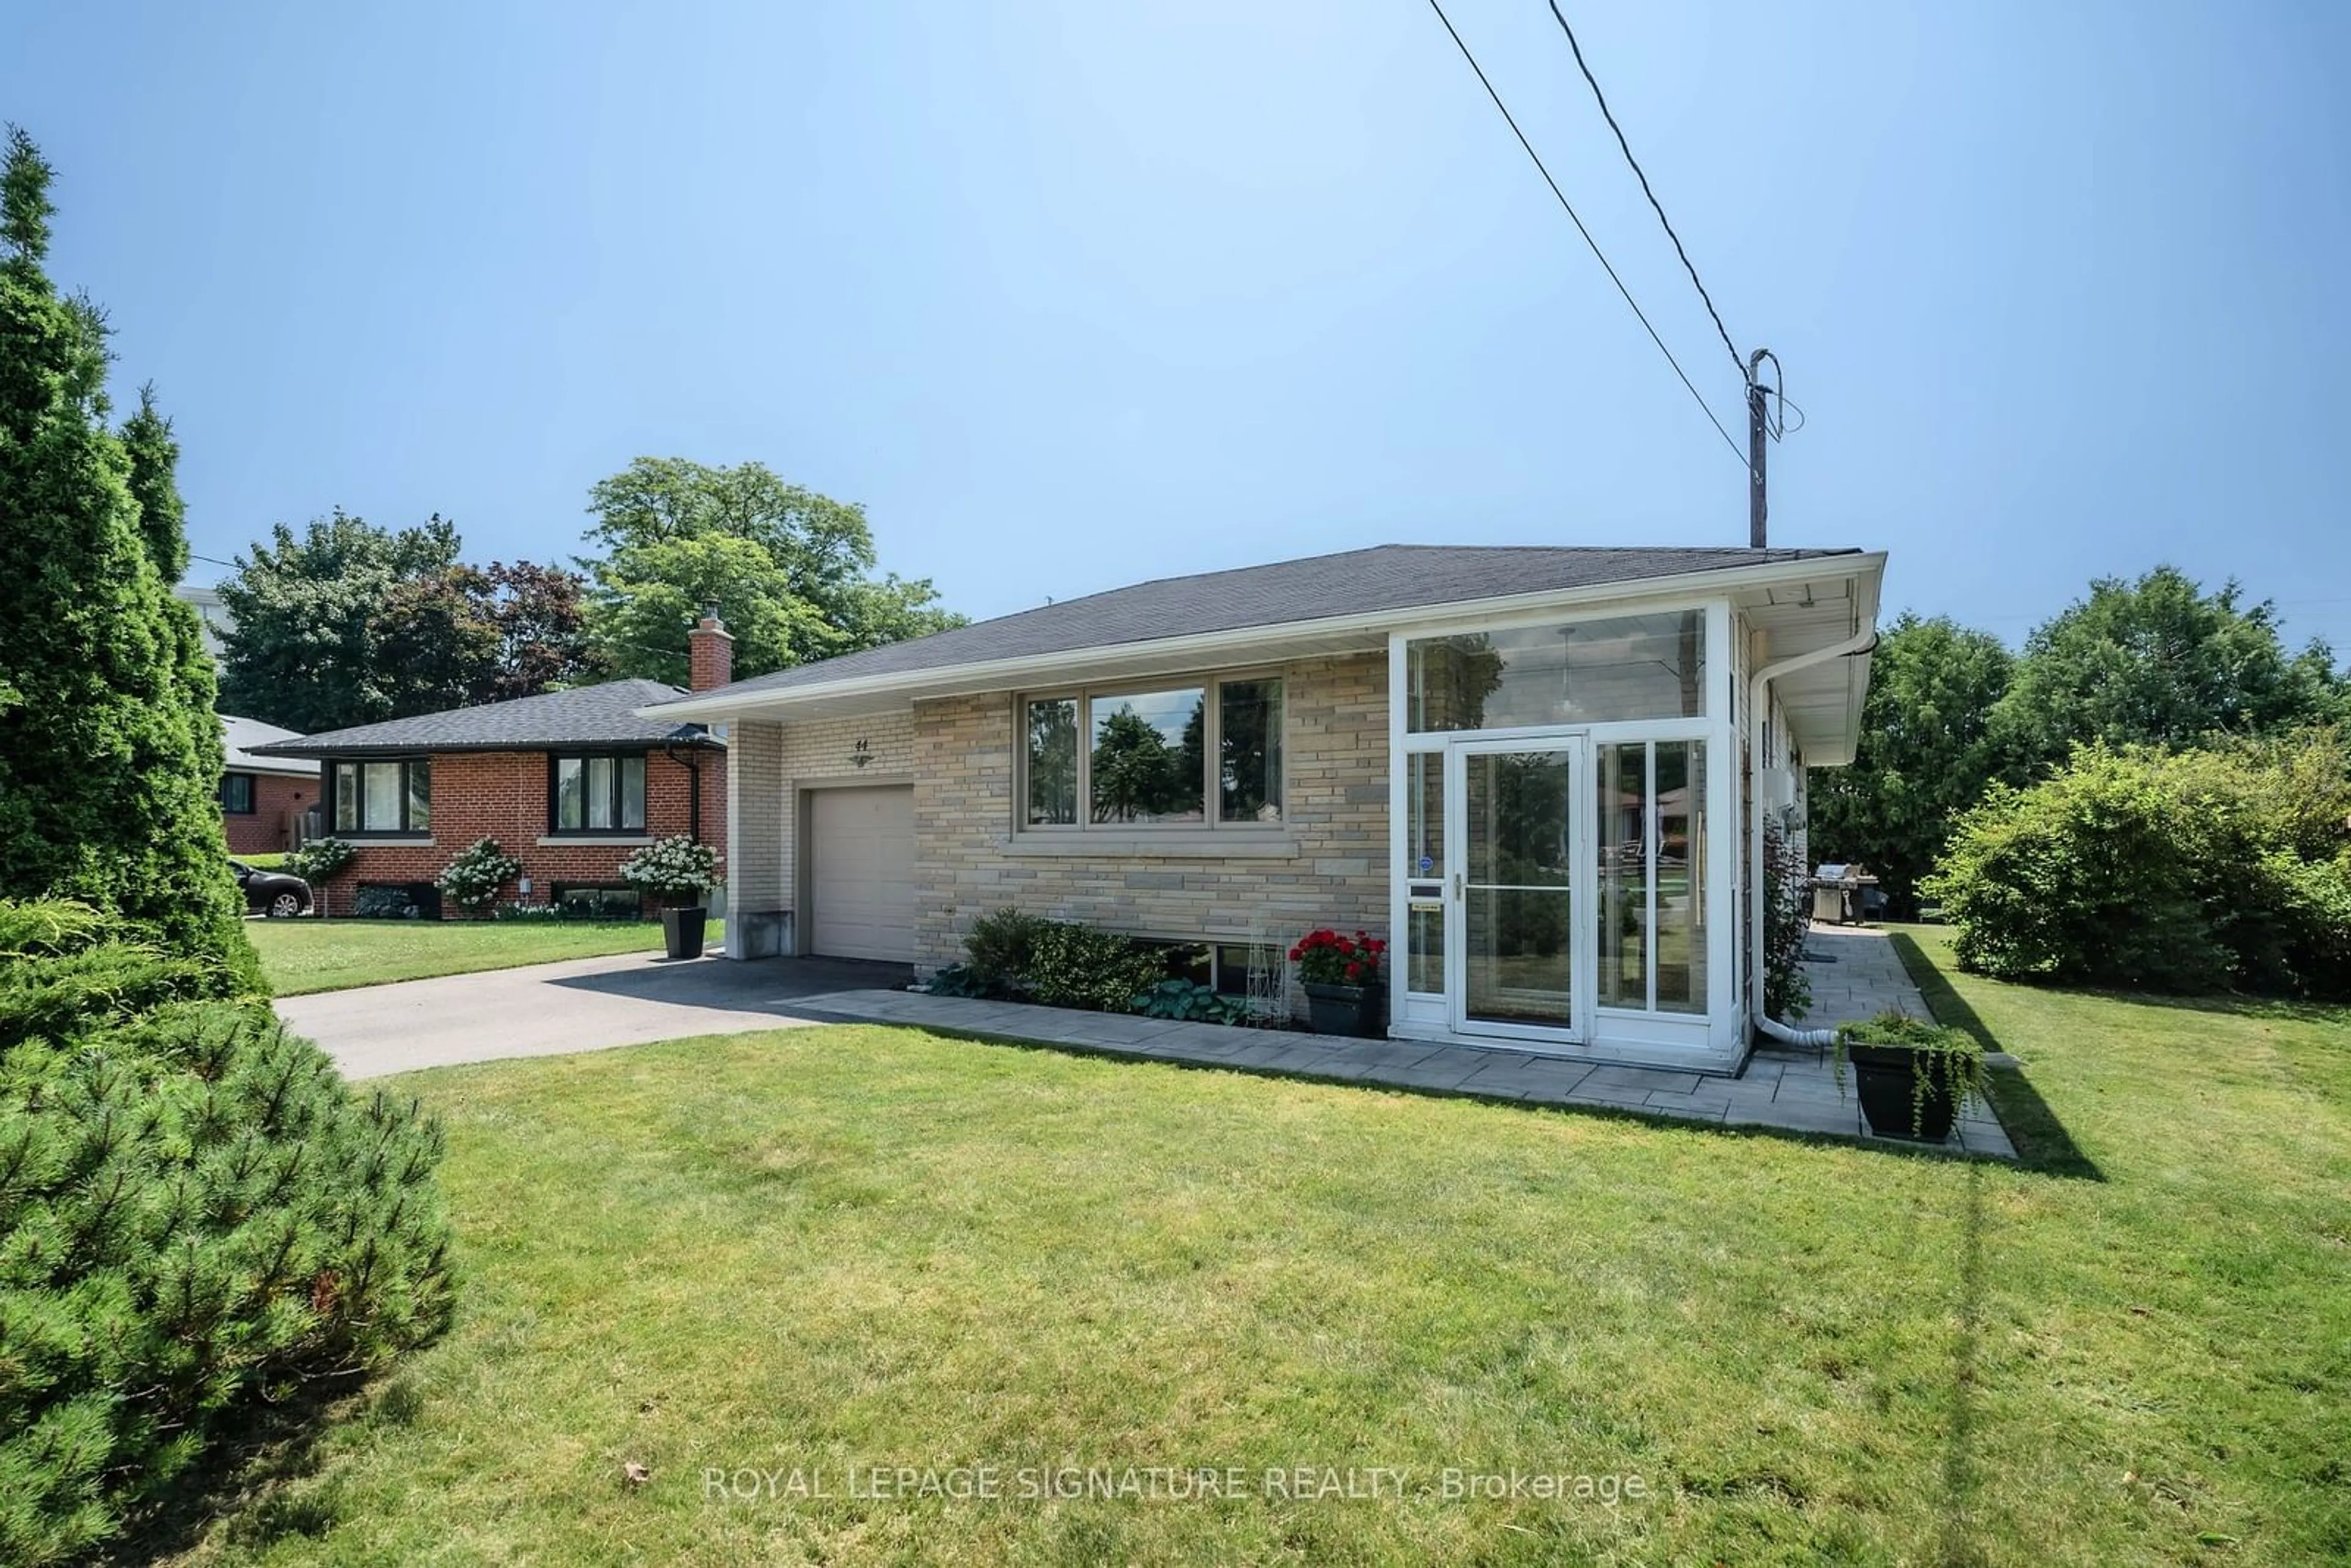 Home with brick exterior material for 44 Hesketh Crt, Toronto Ontario M4A 1M6